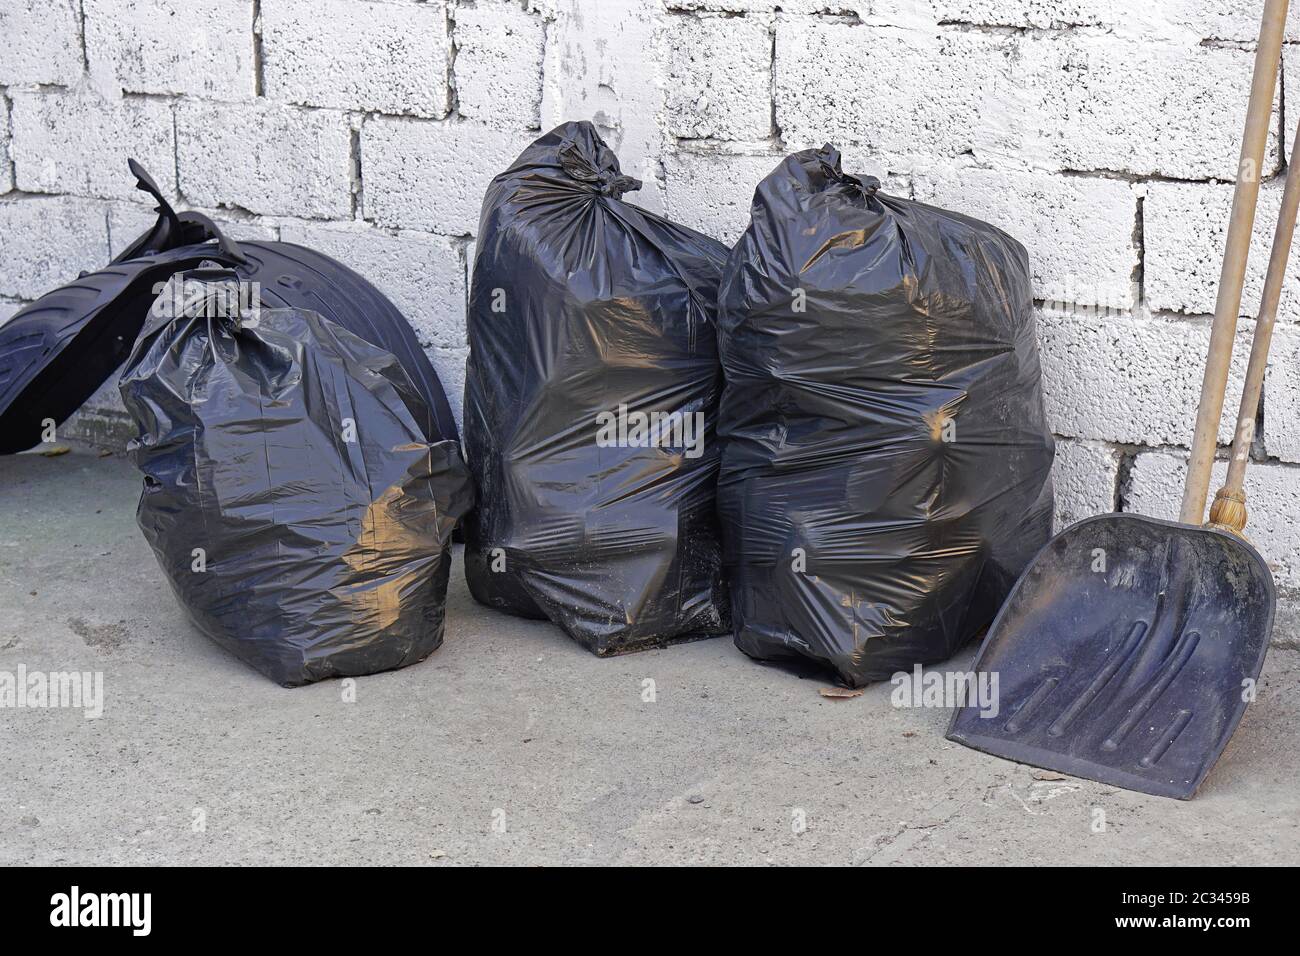 https://c8.alamy.com/comp/2C3459B/three-big-blacks-trash-bags-in-front-of-wall-2C3459B.jpg